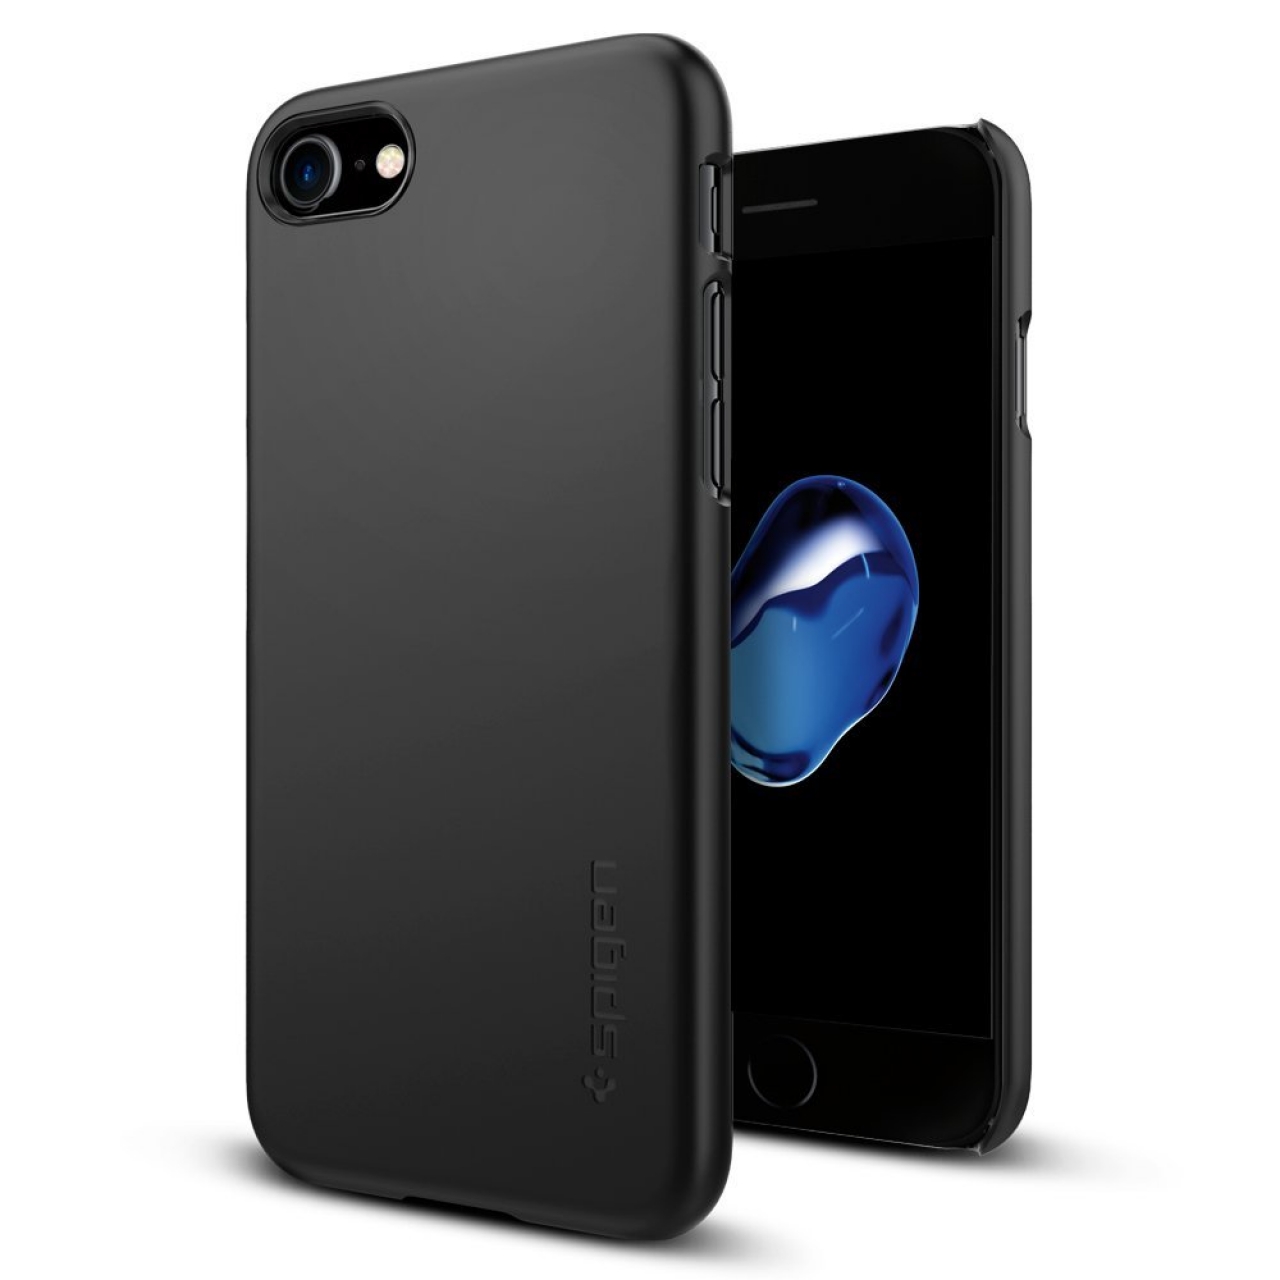 Spigen Thin Fit Case - iPhone 7 (Black) iClarified